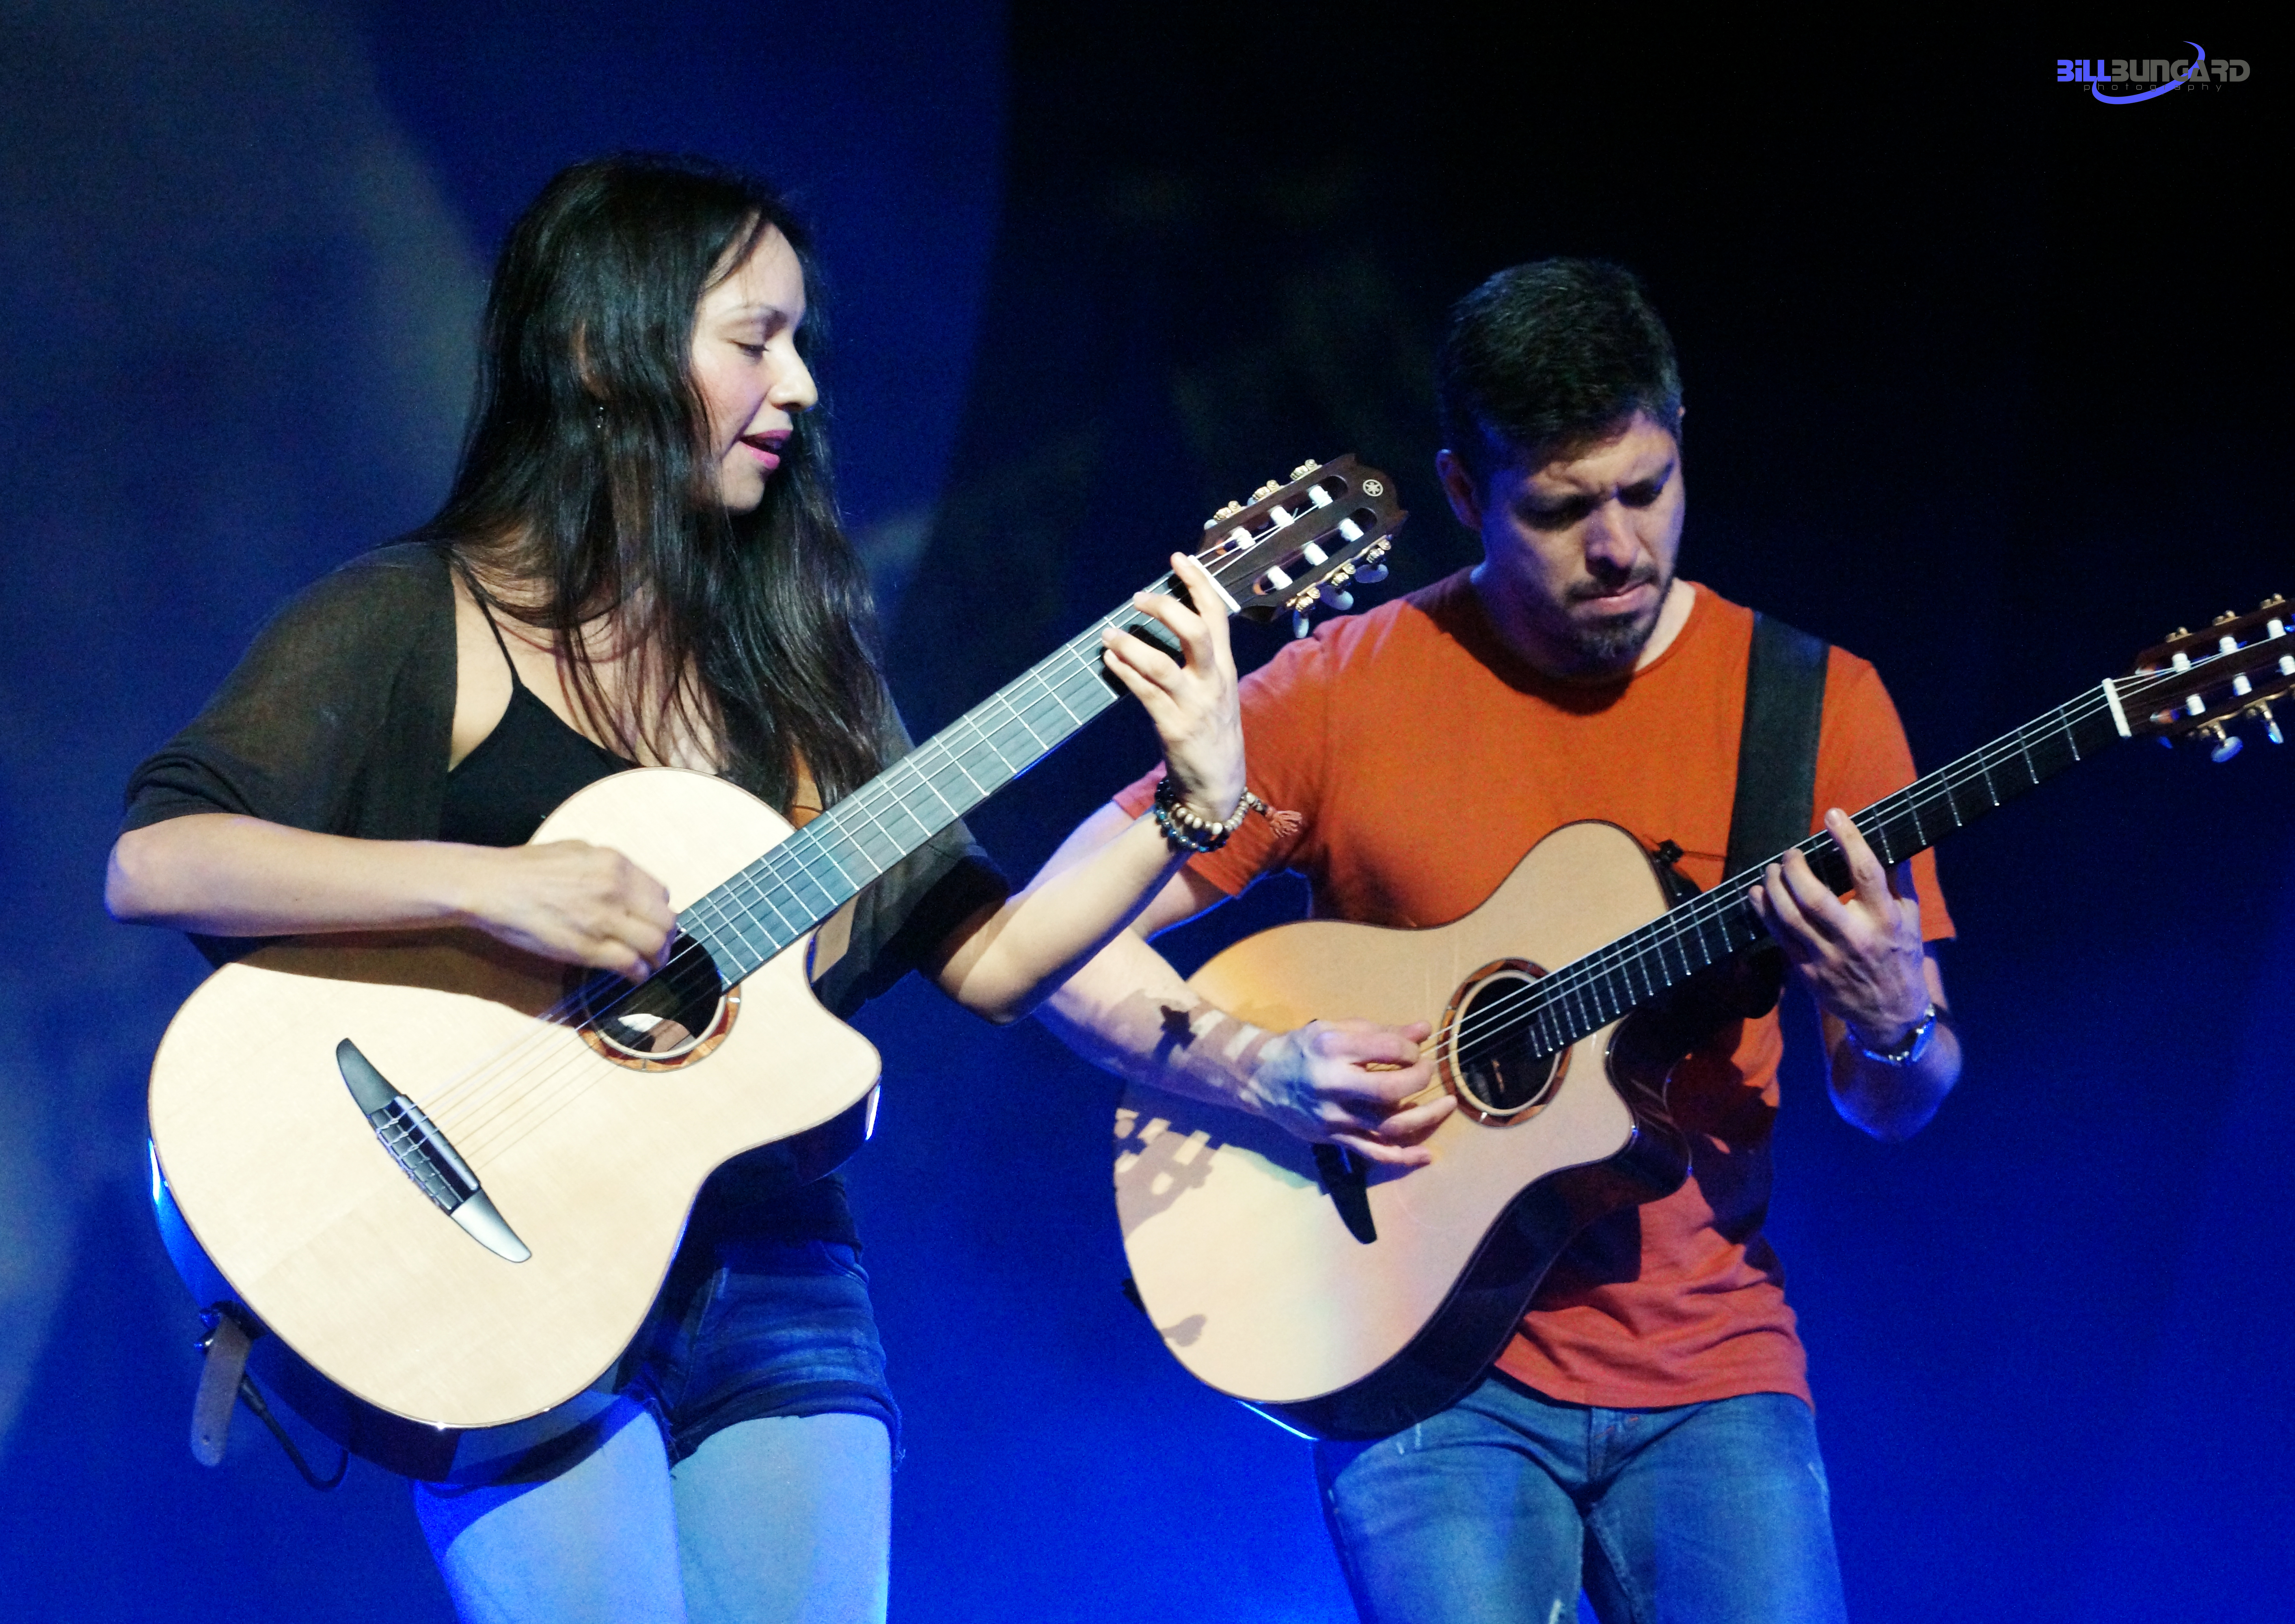 Rodrigo y Gabriela Live at The Paramount (Photo by Bill Bungard)